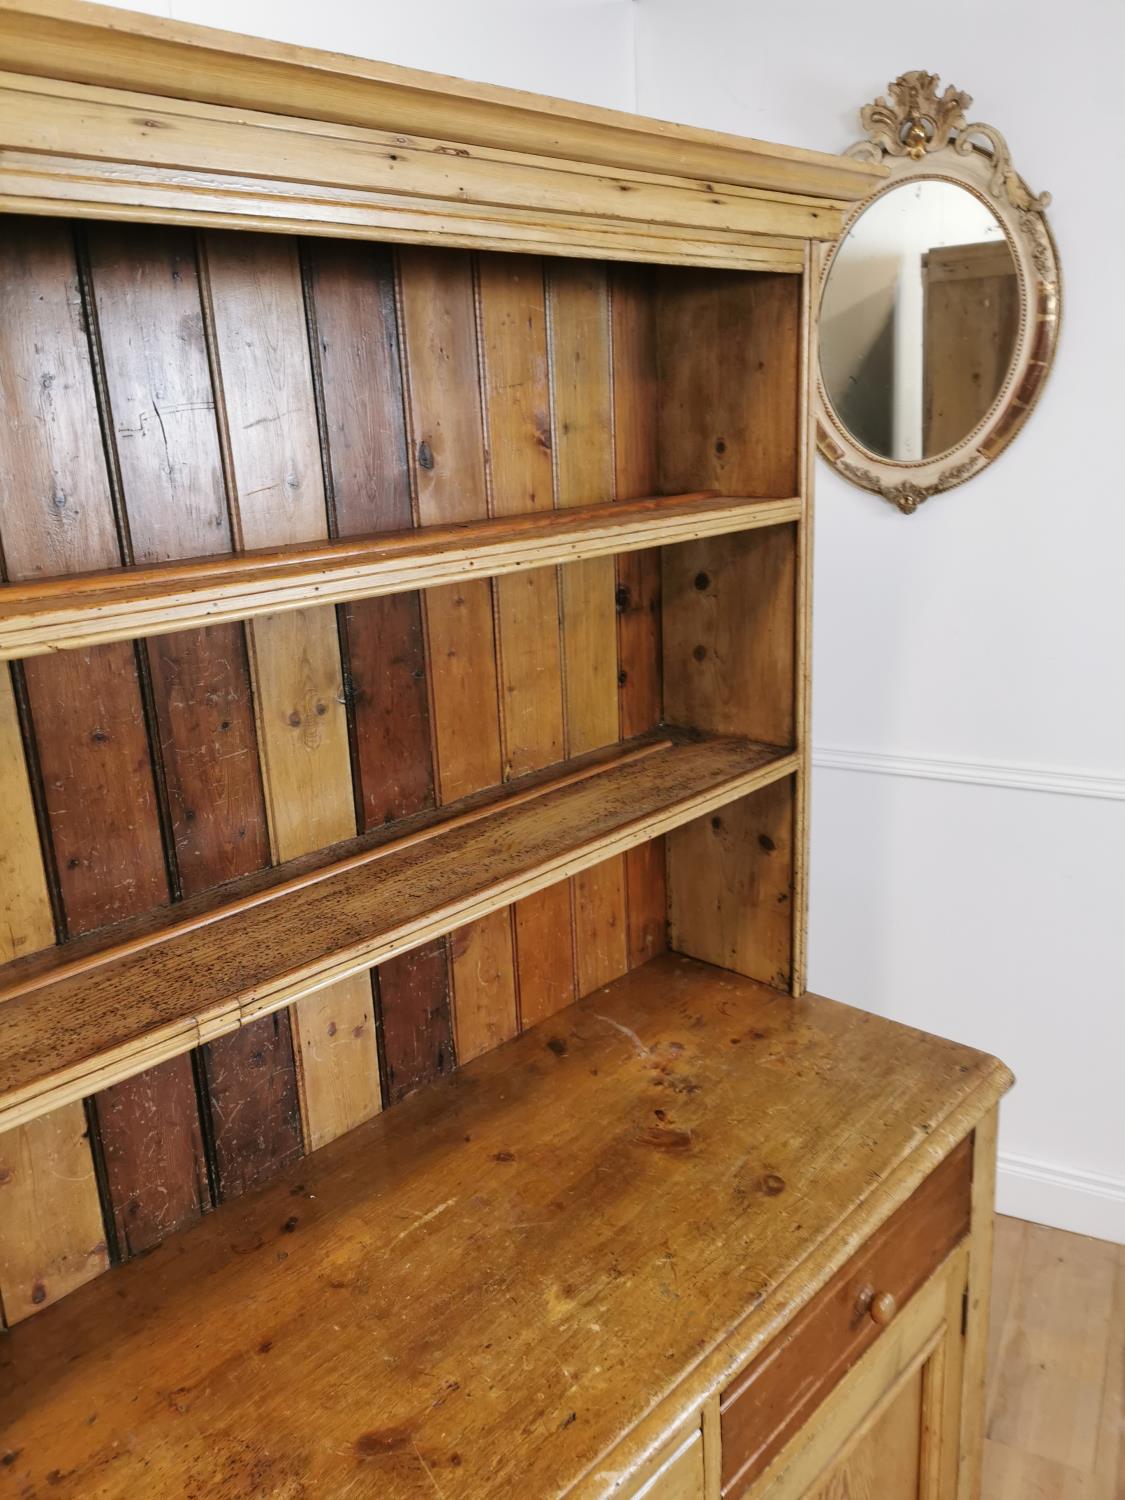 19th C. Irish pine kitchen dresser with open shelves - Image 3 of 7